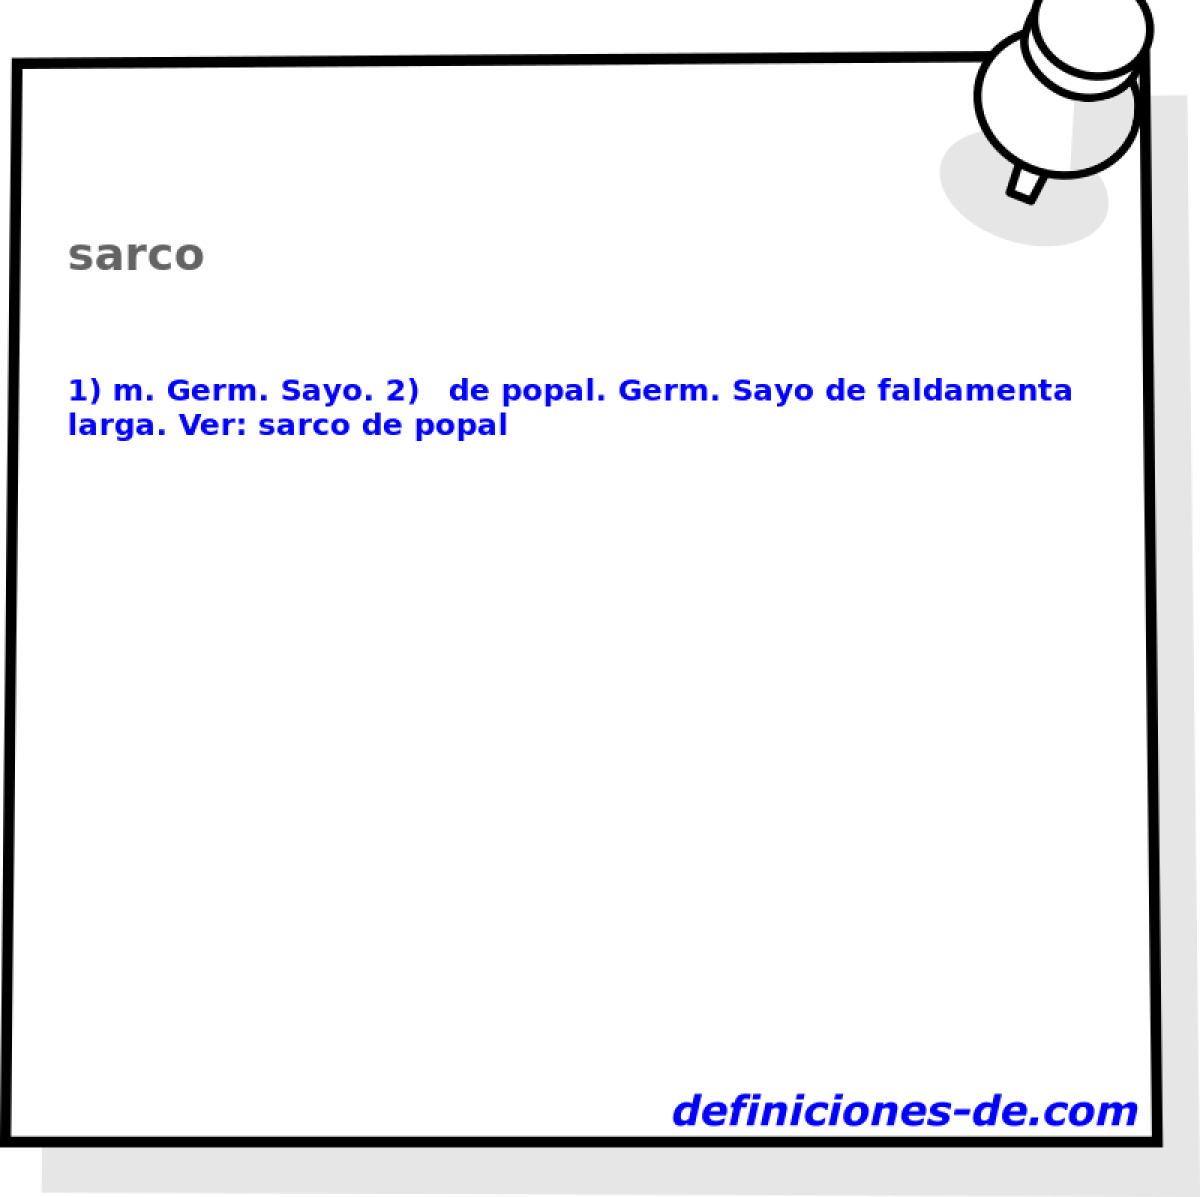 sarco 